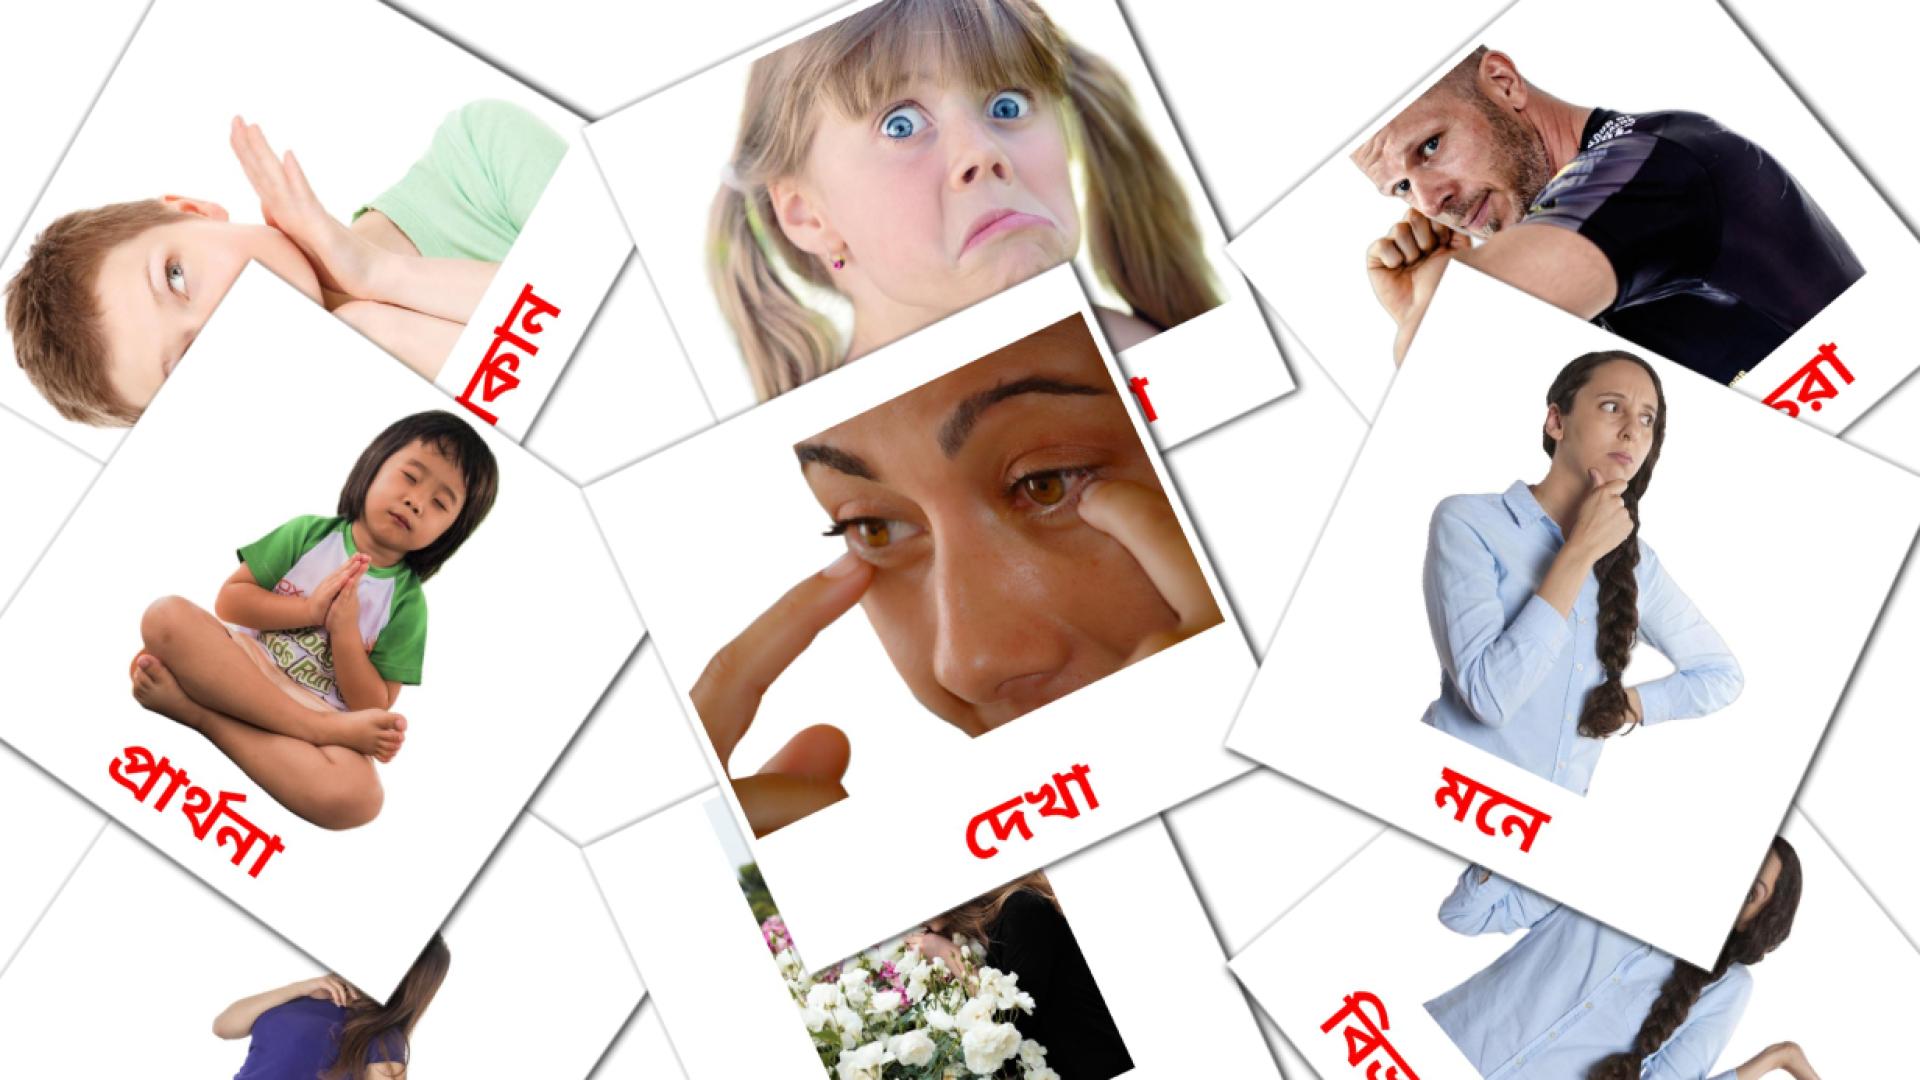 State verbs - bengali vocabulary cards